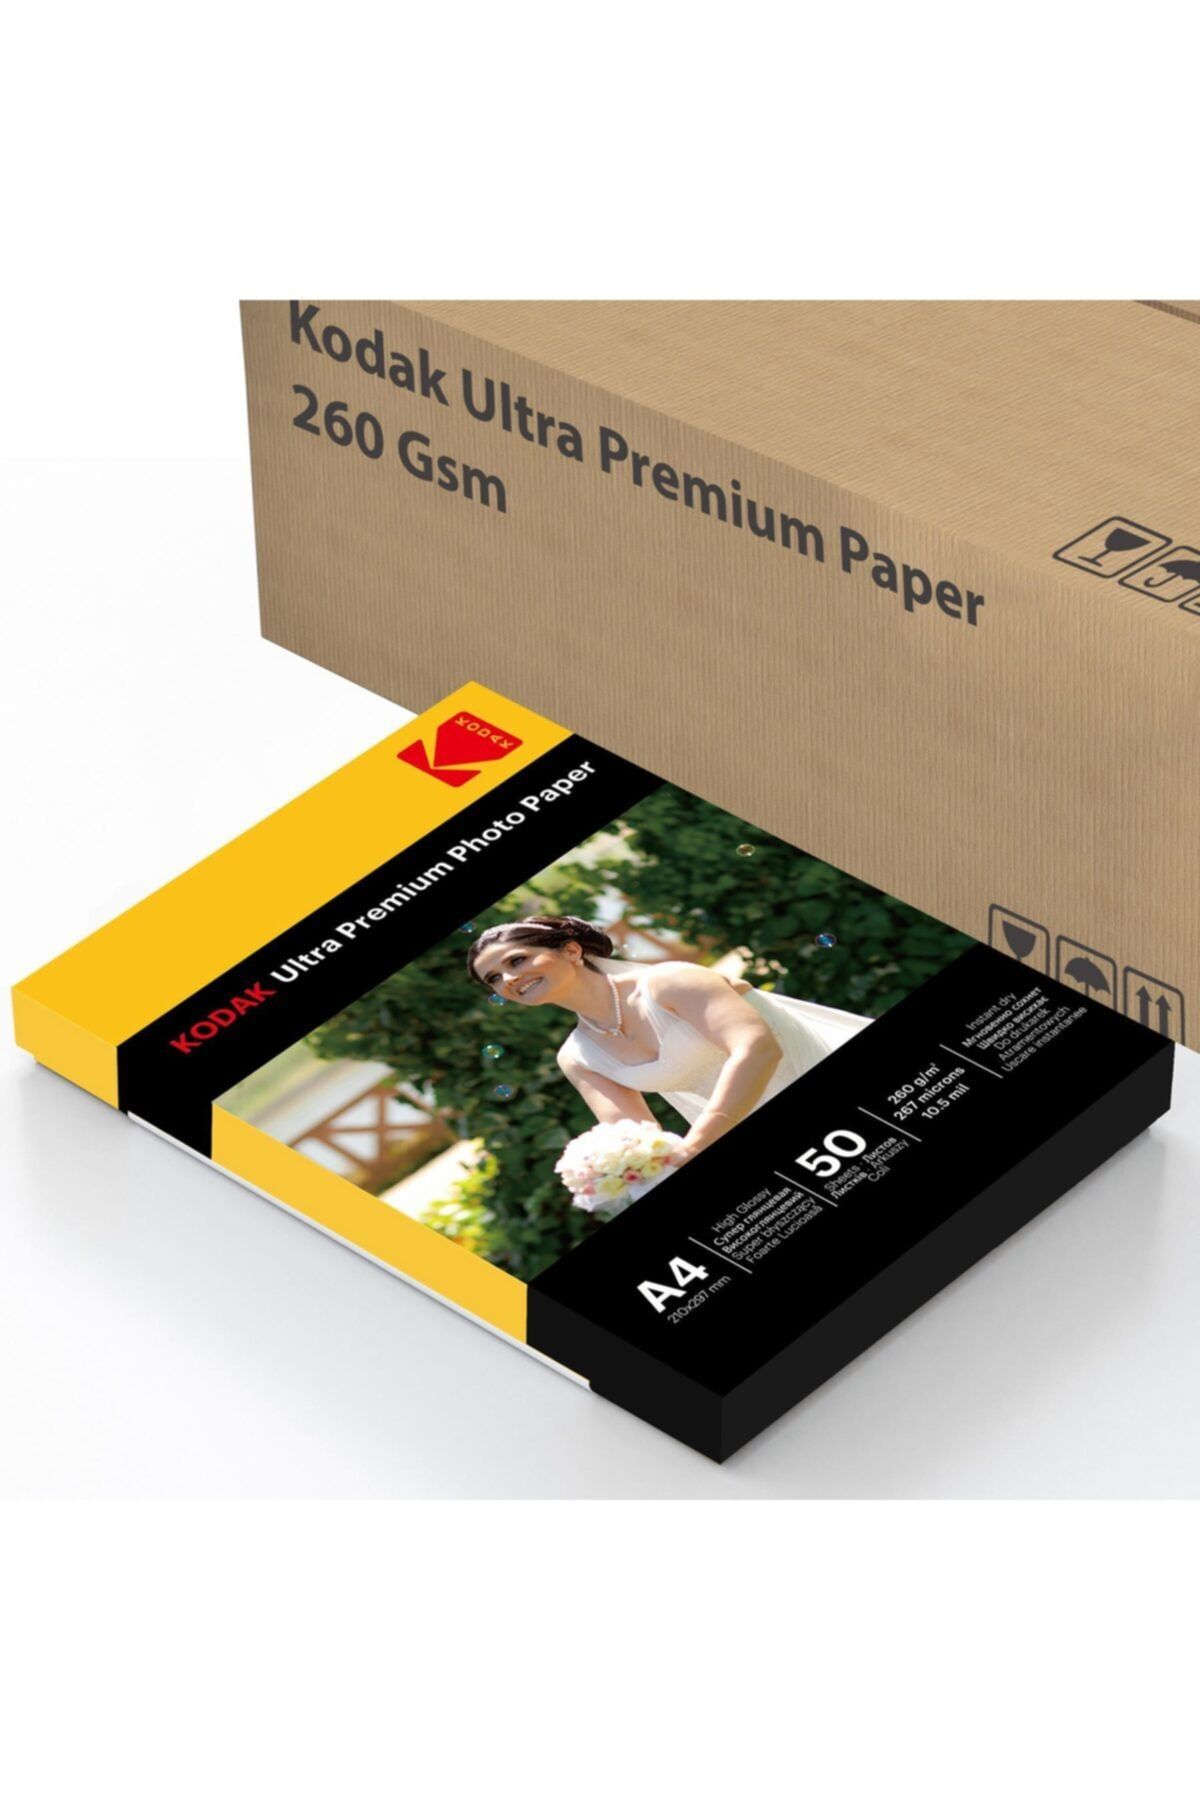 Kodak Ultra Premium Glossy,parlak A4 260gr 1 Koli 20 Paket